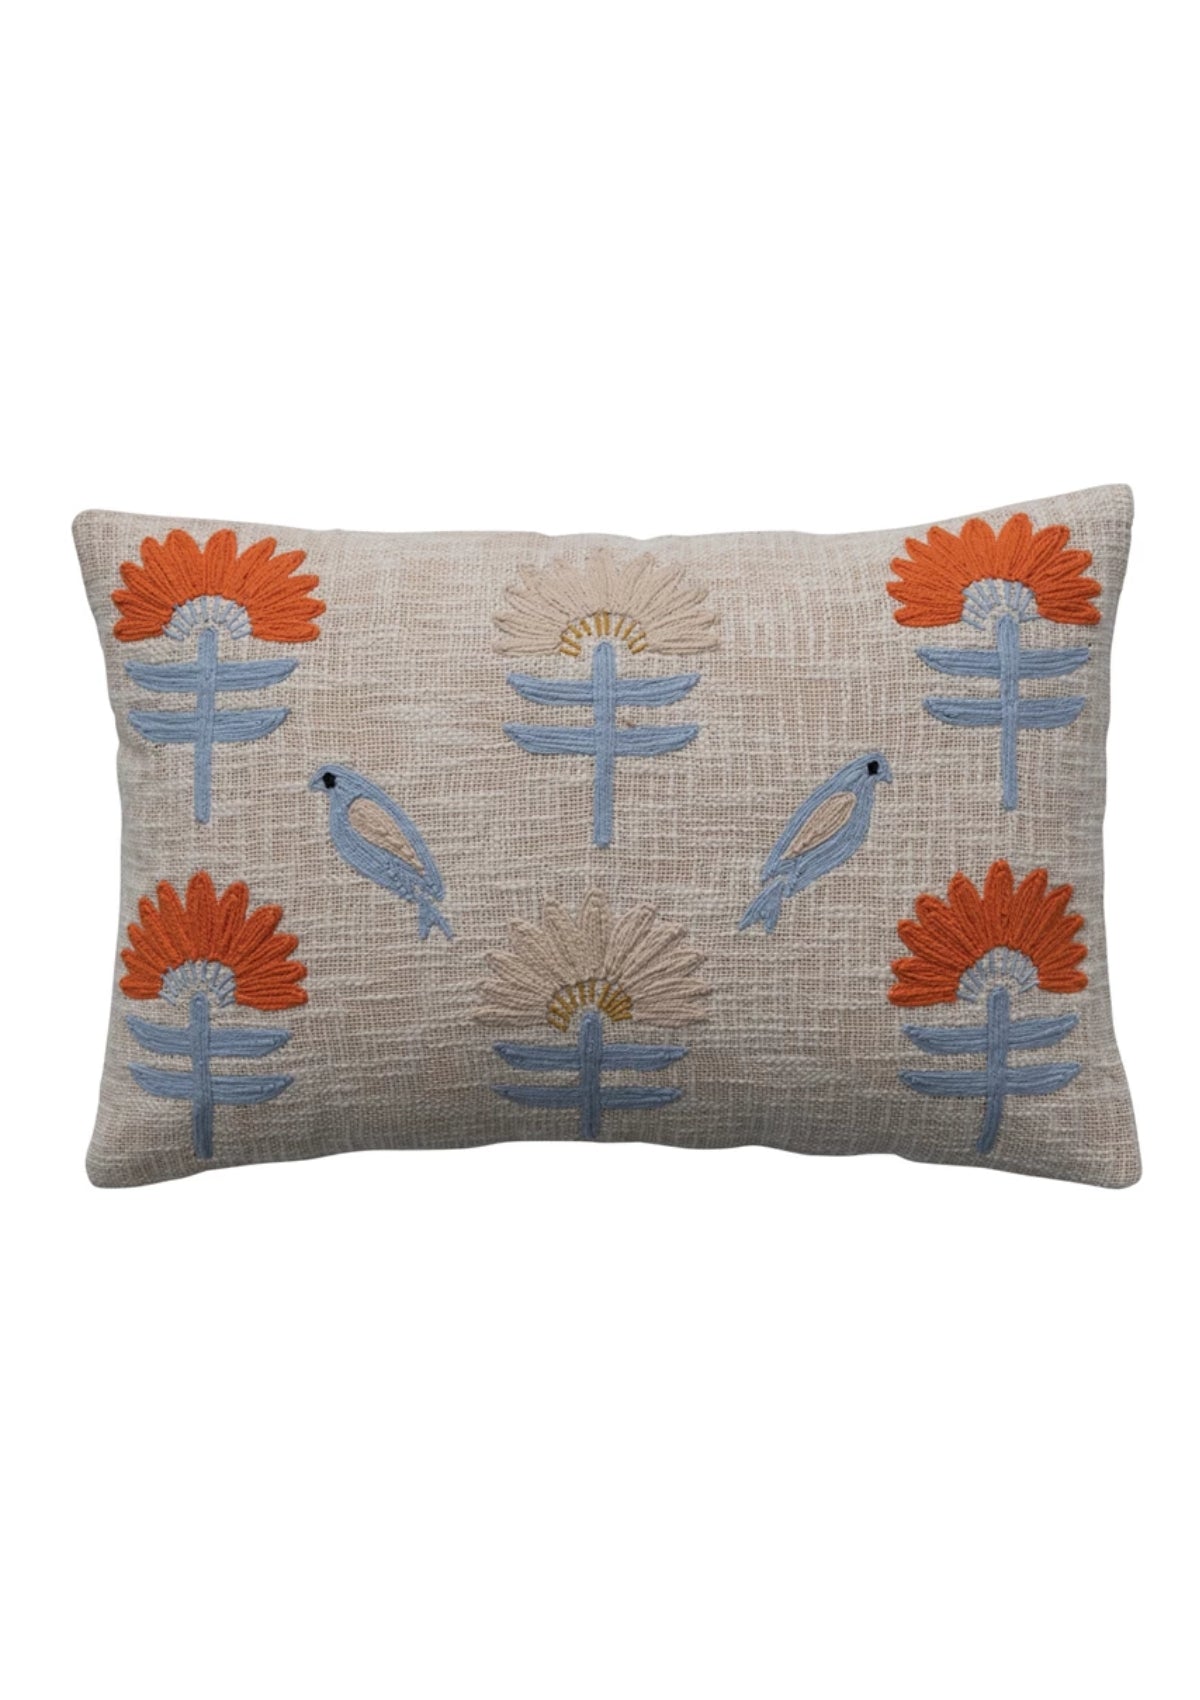 Woven Cotton Lumbar Pillow -Creative Co-op- Ruby Jane-